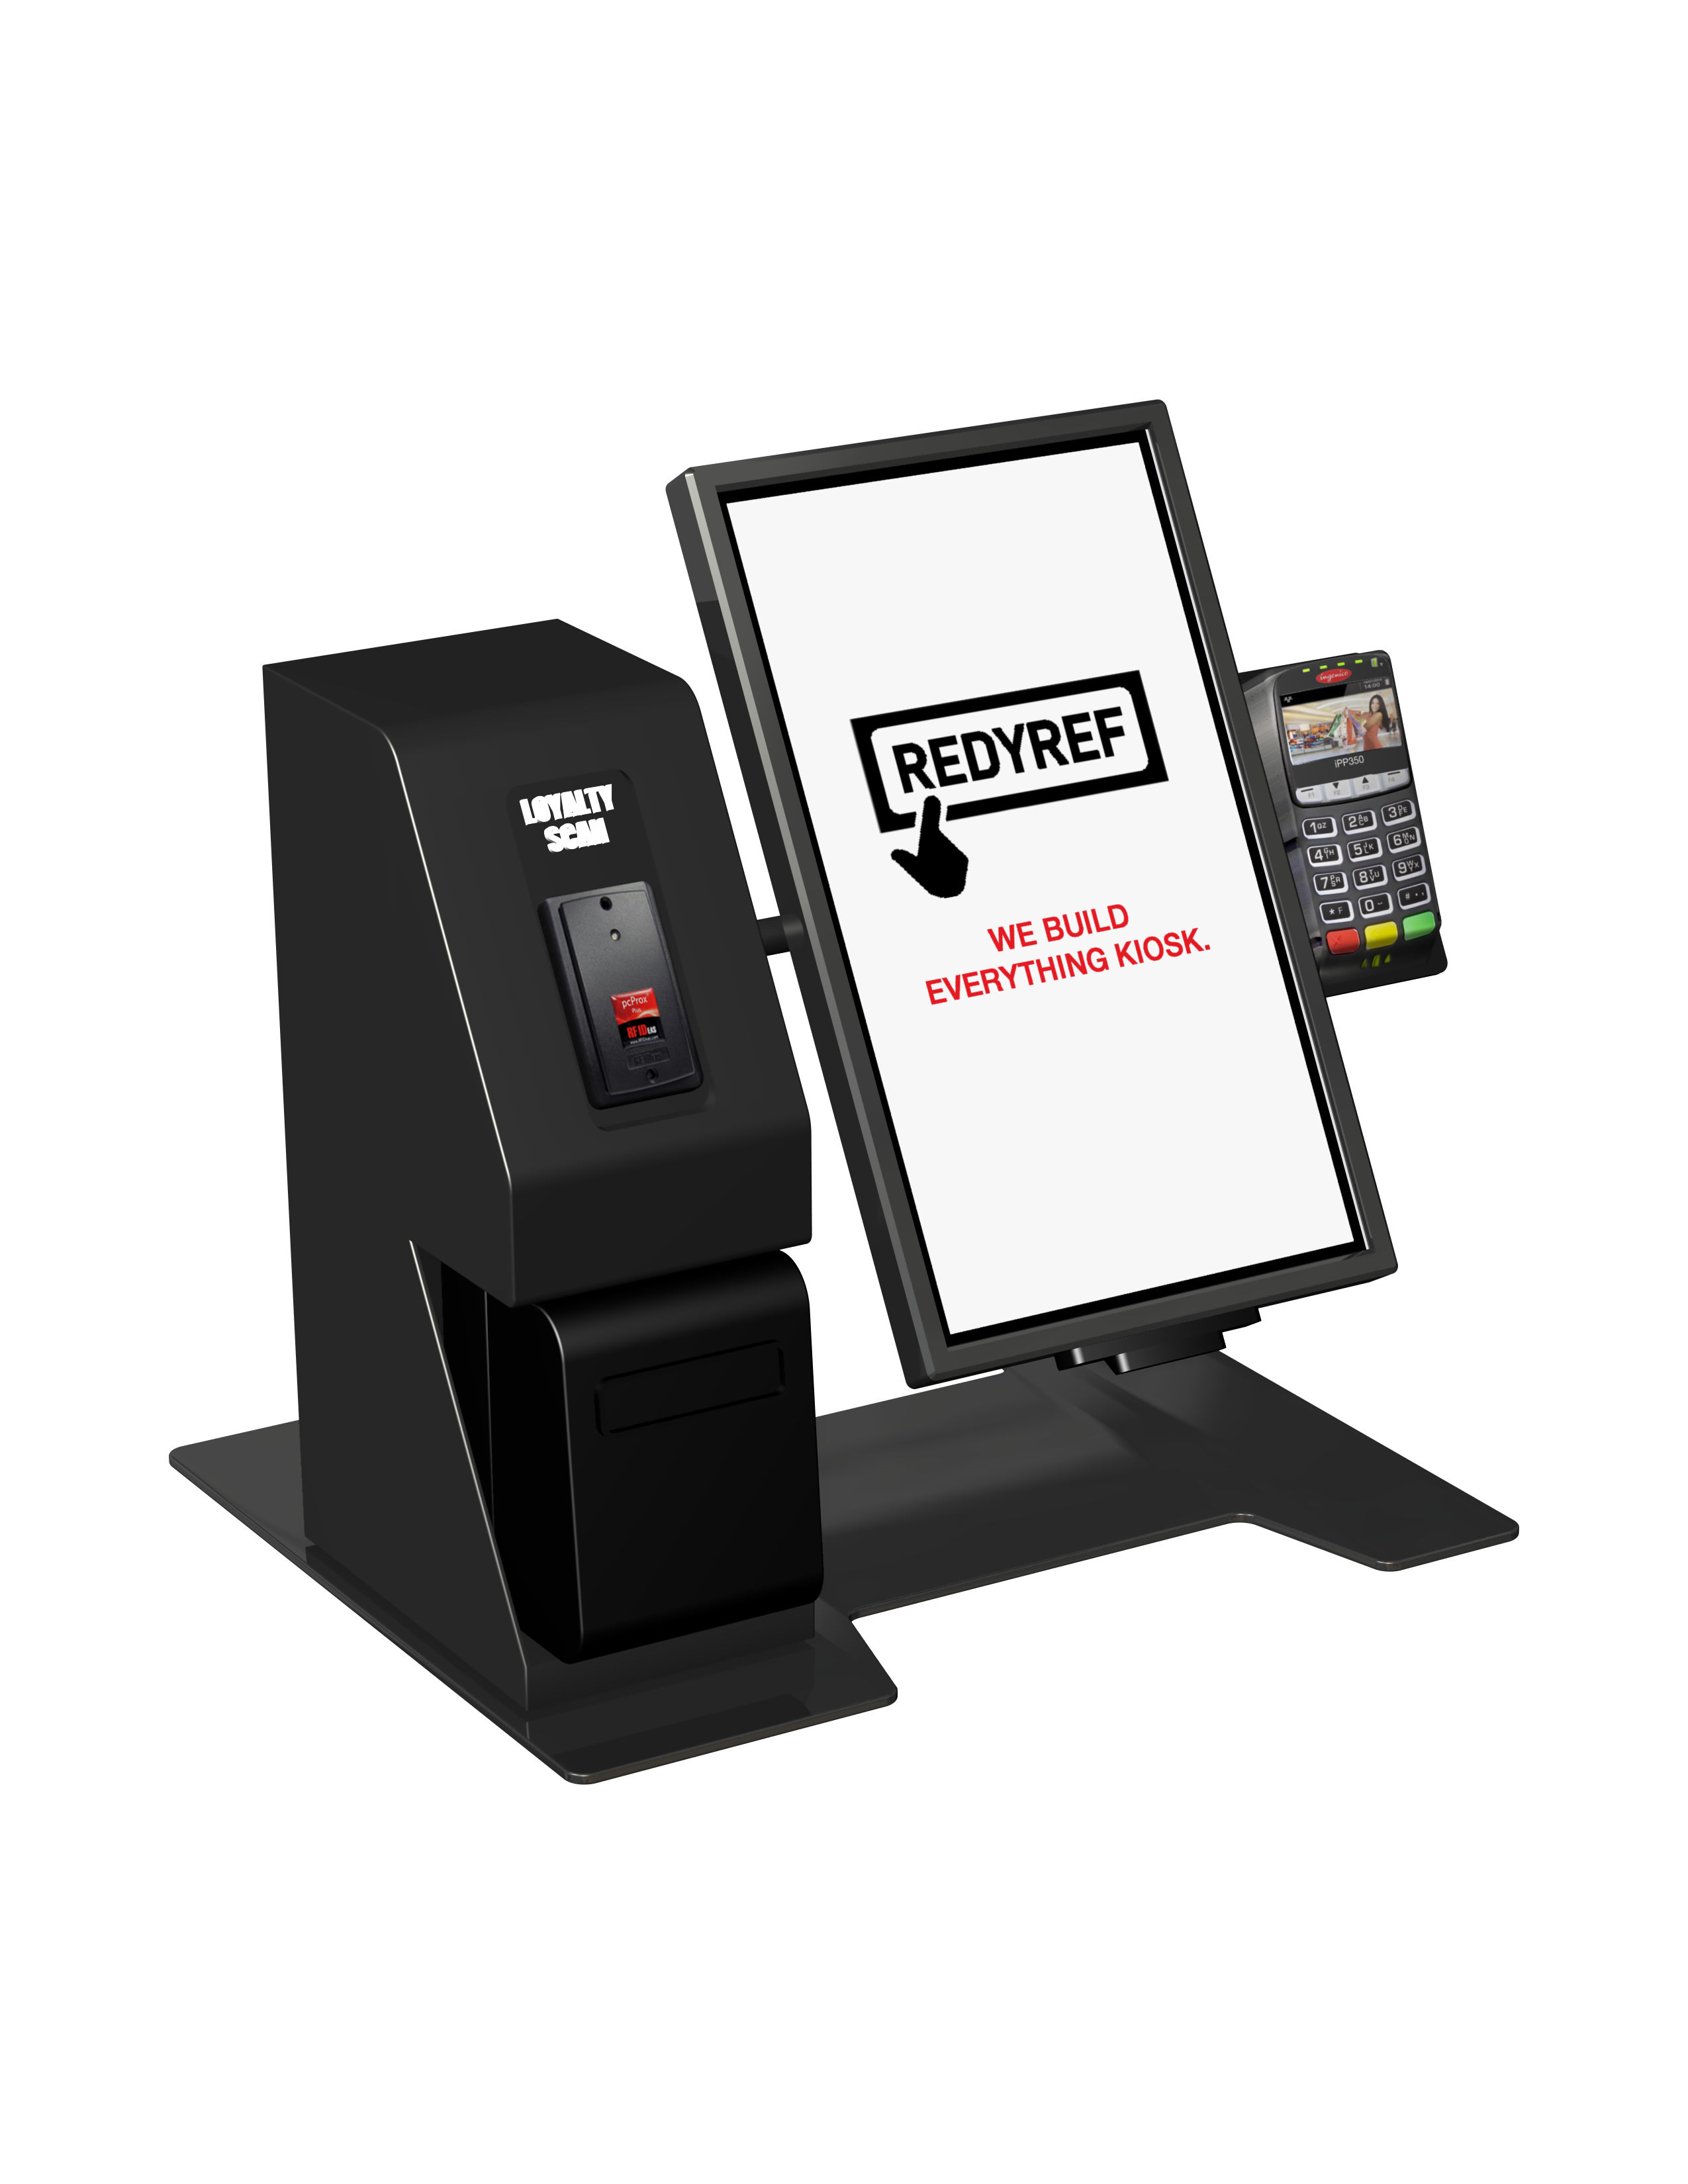 mounted digital QSR kiosk.